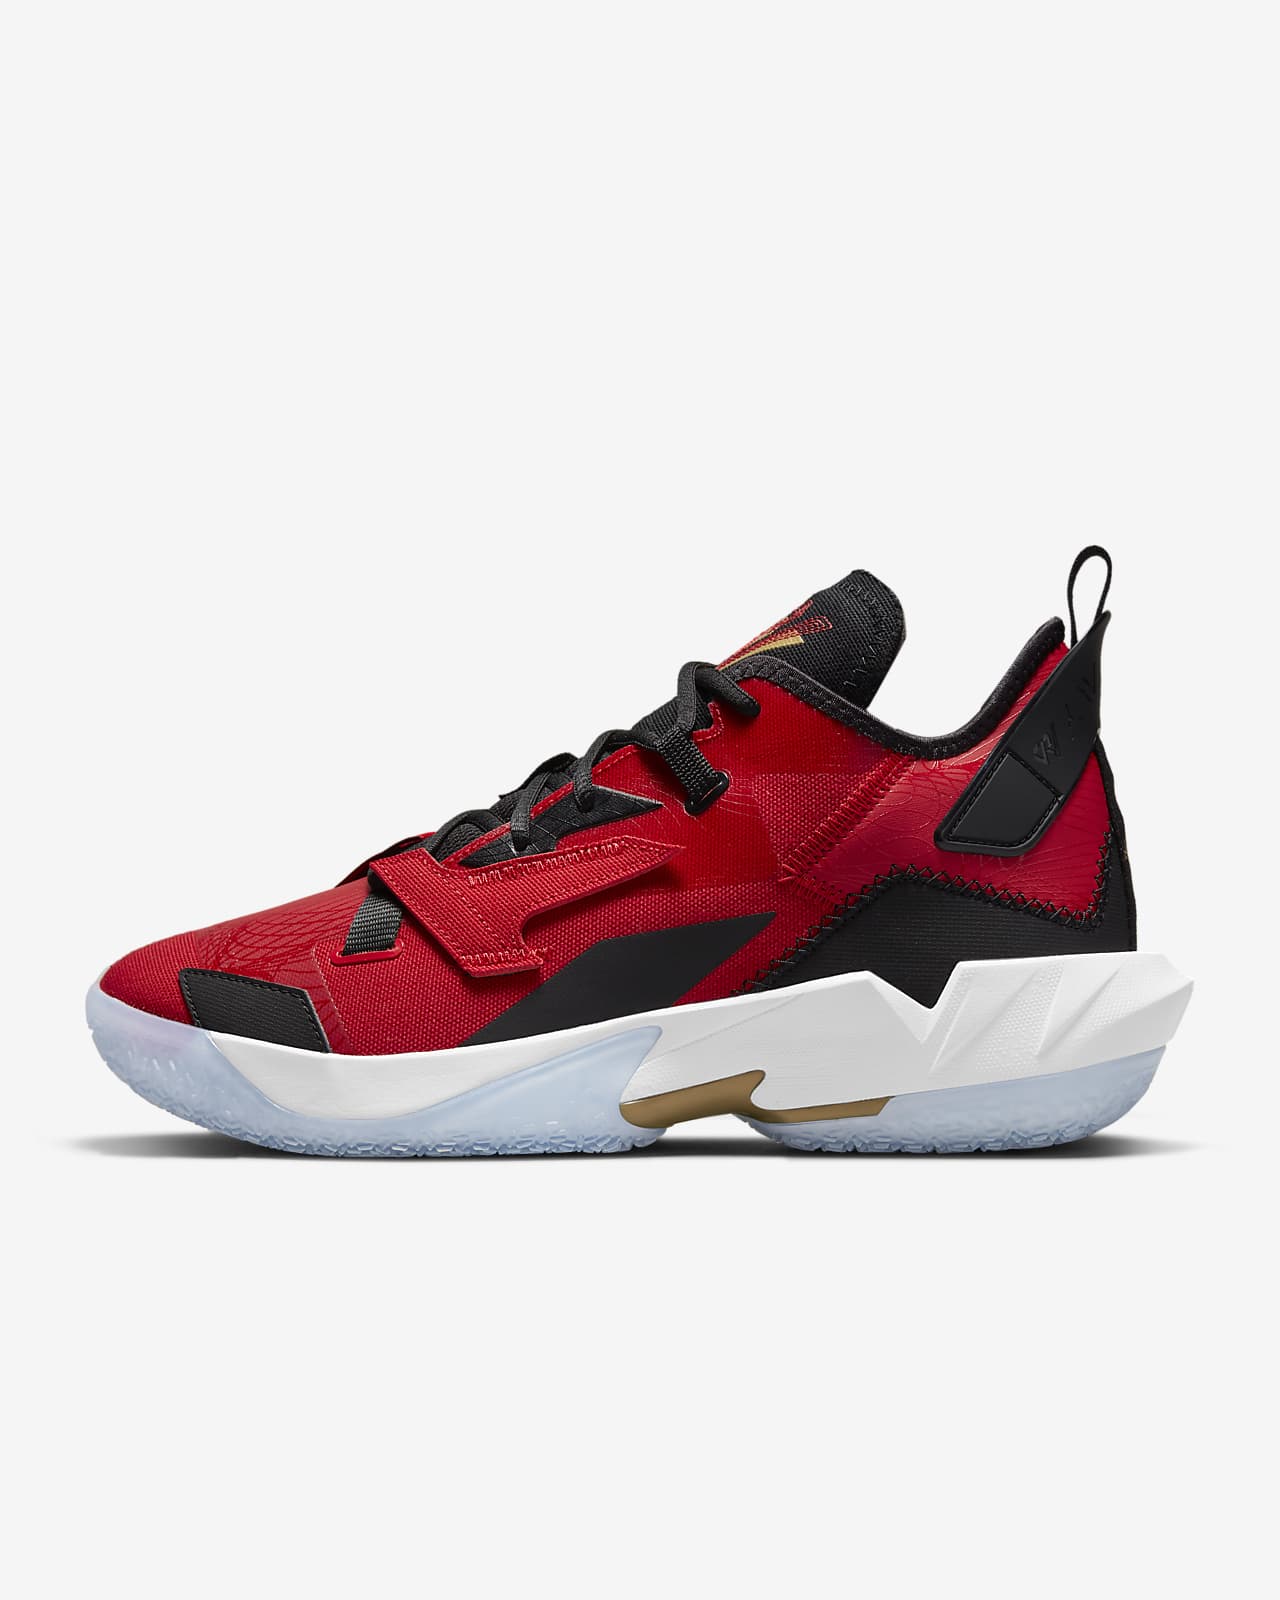 Jordan "Why Not?" Zer0.4 PF Basketball Shoes